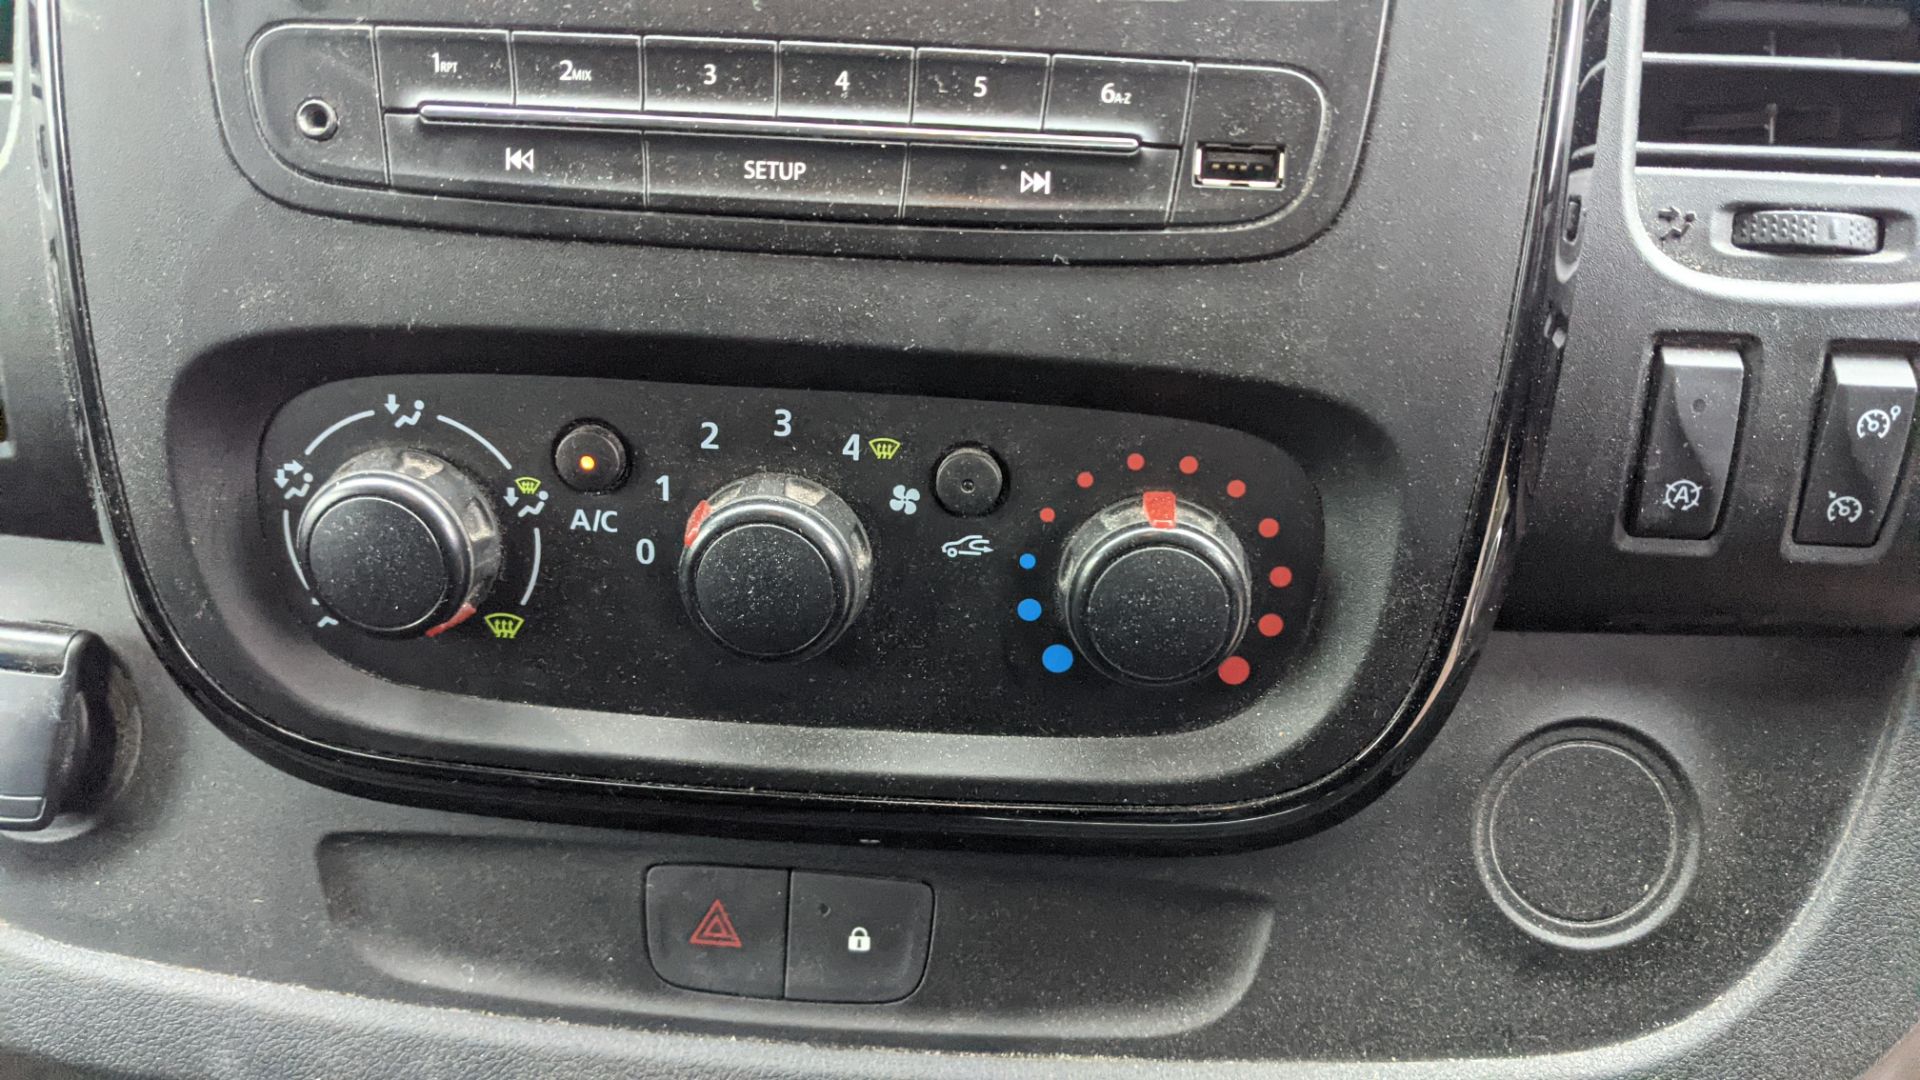 2019 Vauxhall Vivaro L2 2900 Sport CDTI BT SS panel van (Registration FD19 YUB) - Image 37 of 55